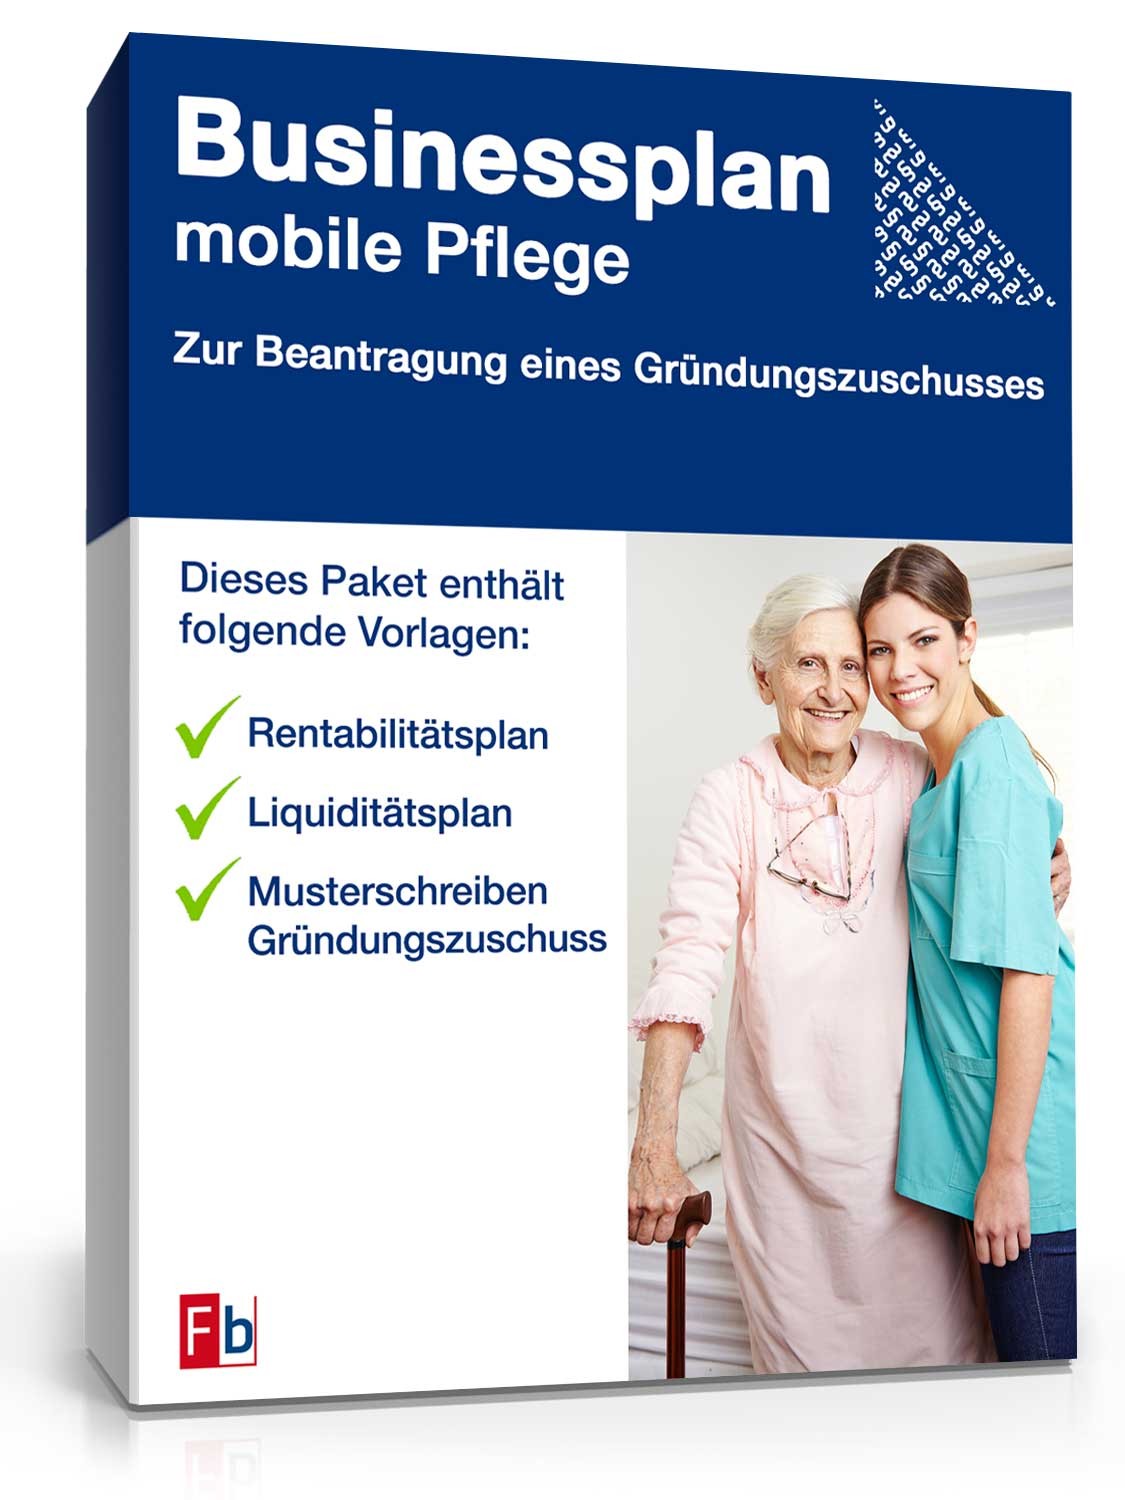 Hauptbild des Produkts: Businessplan mobile Pflege 